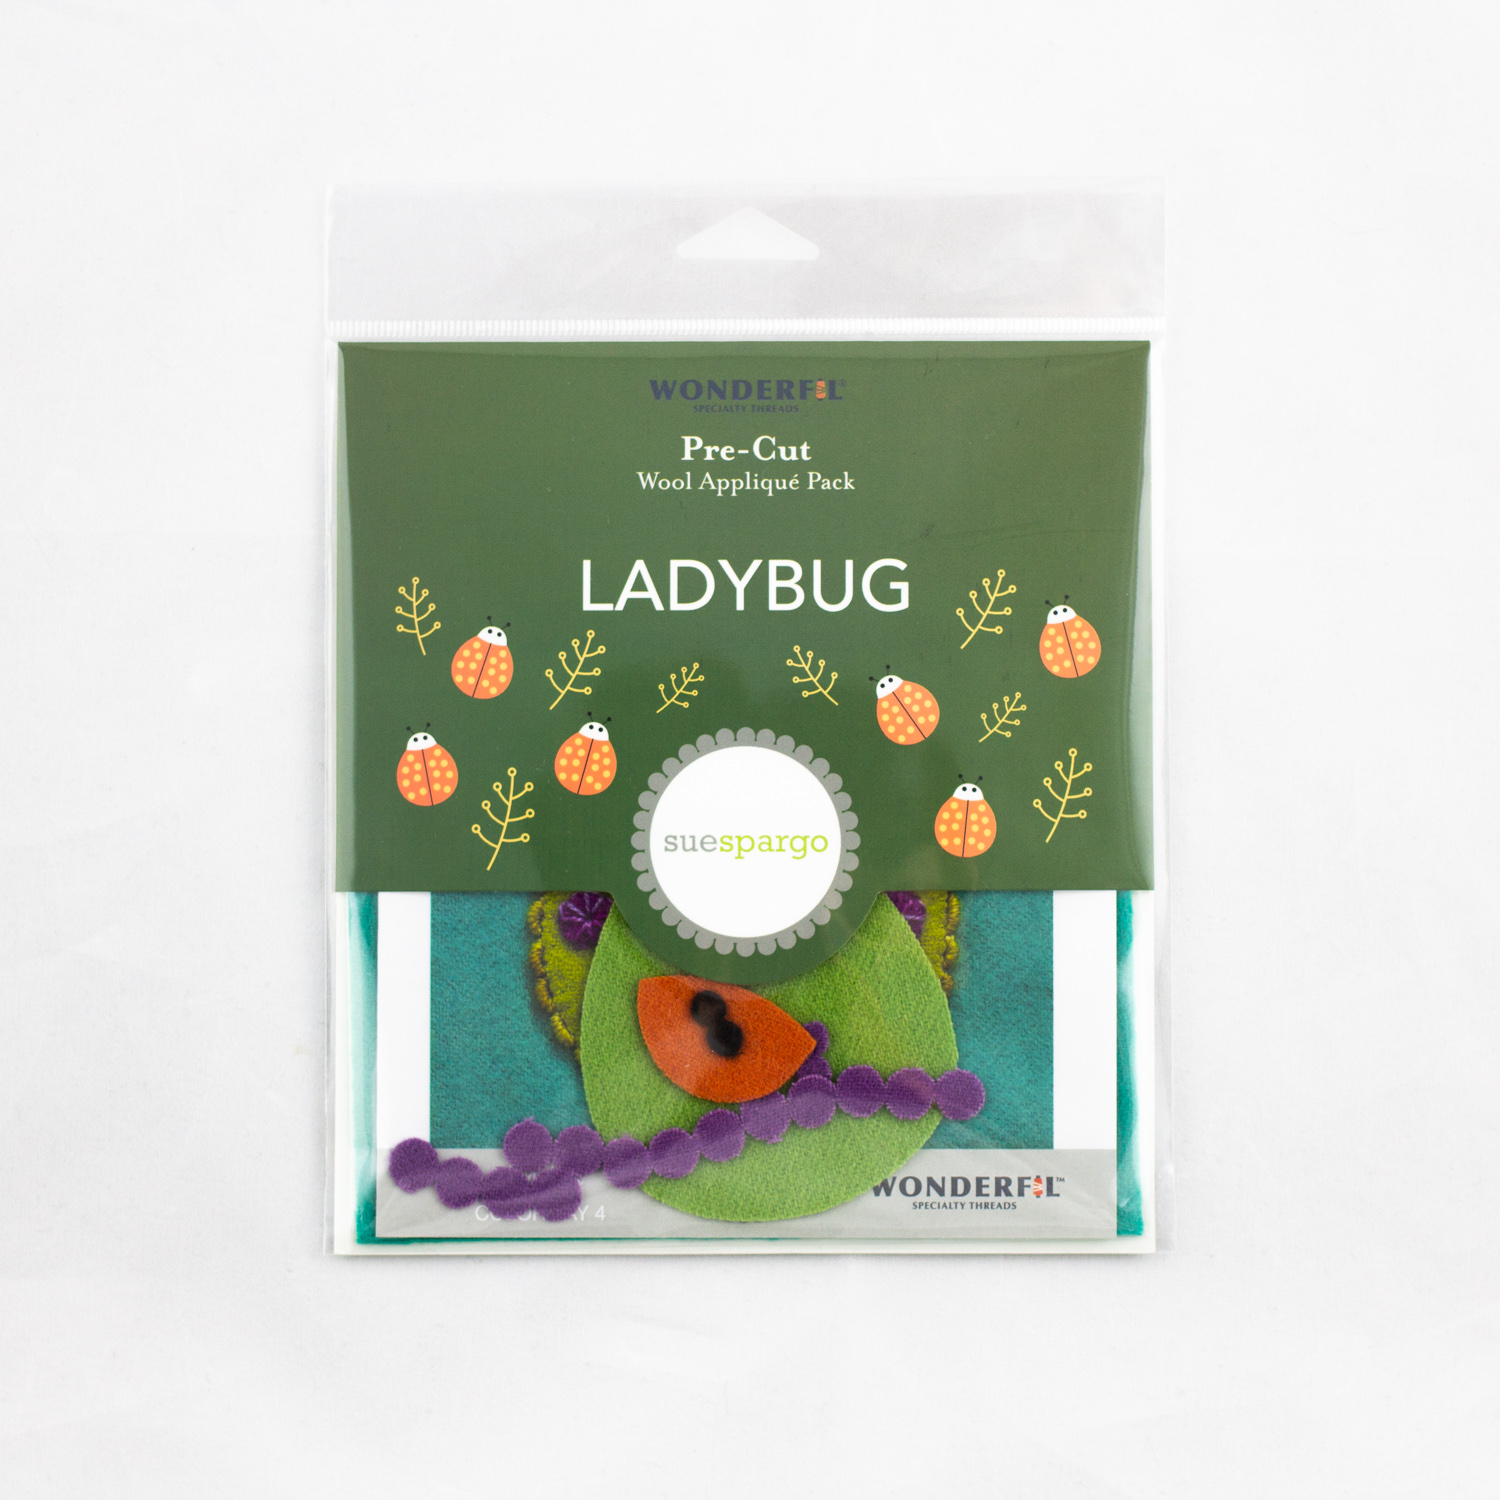 Ladybug4.jpg